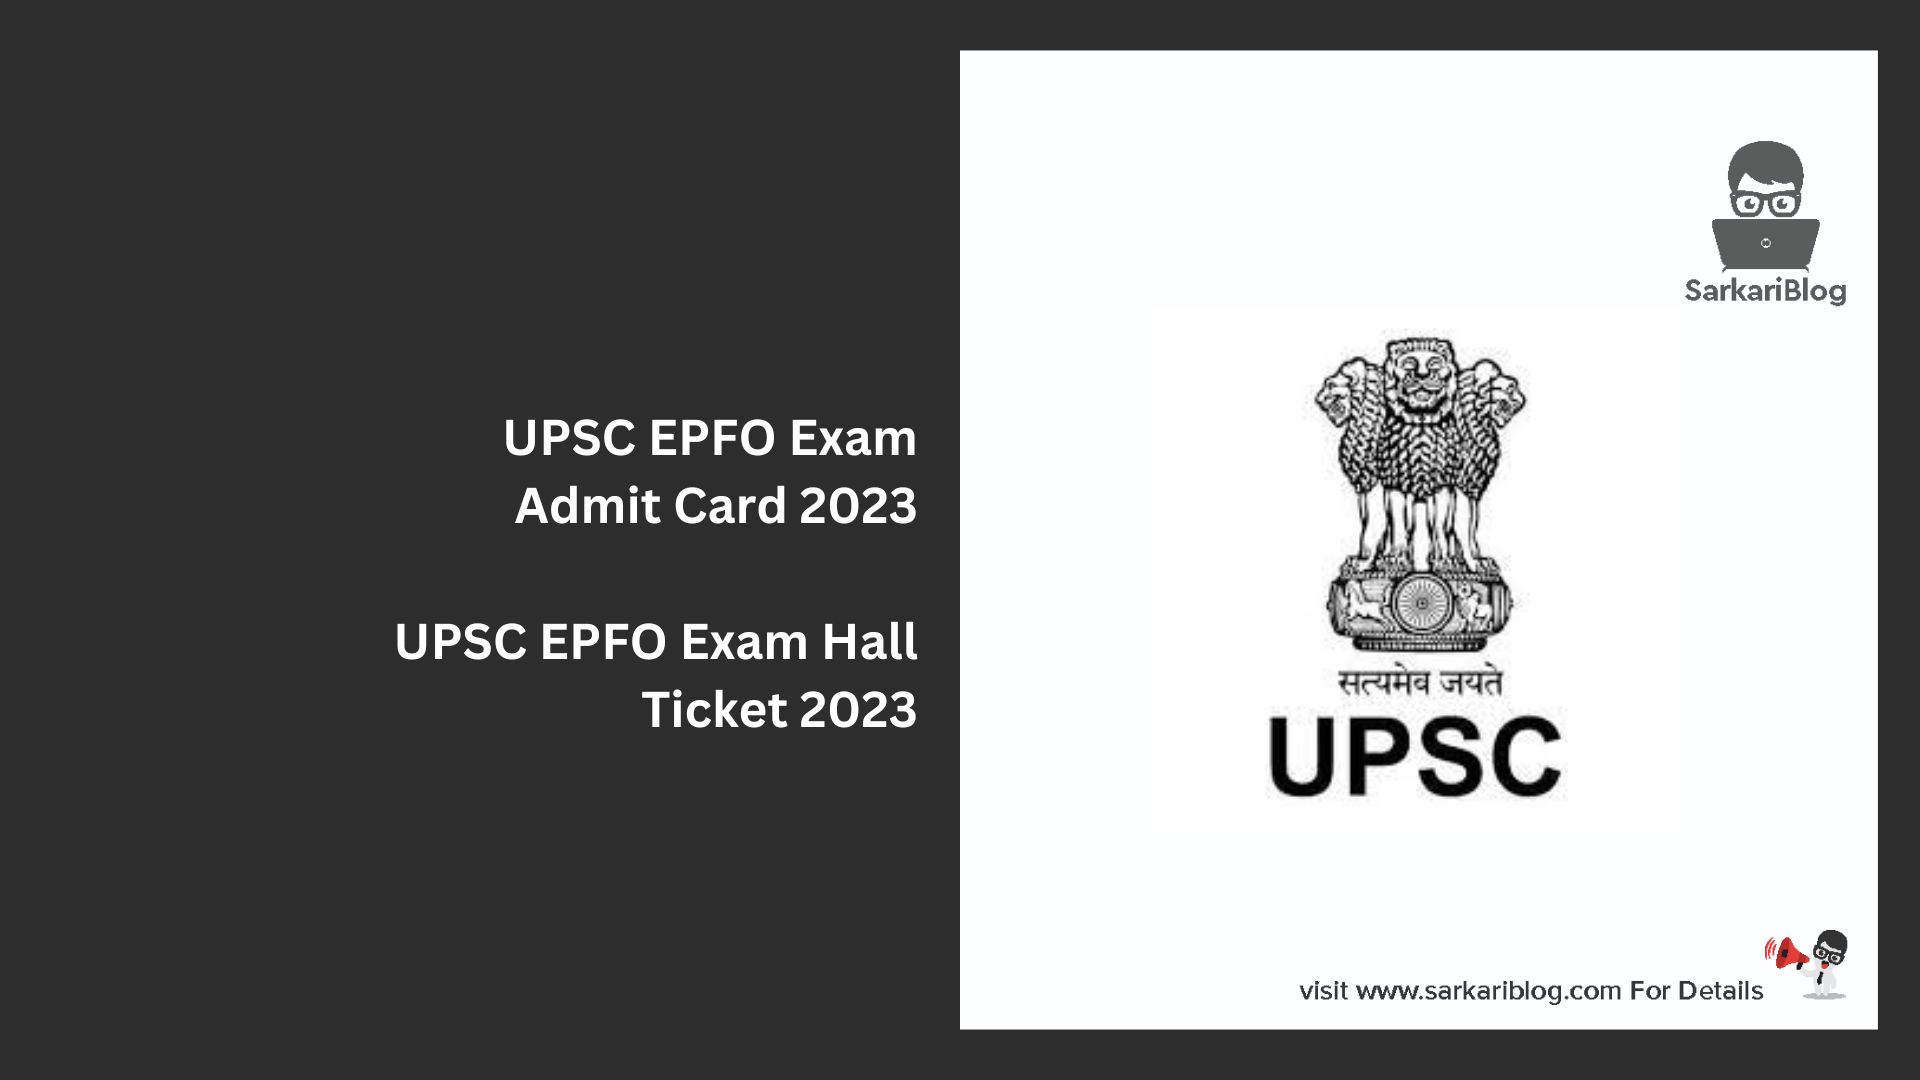 UPSC EPFO Exam Admit Card 2023